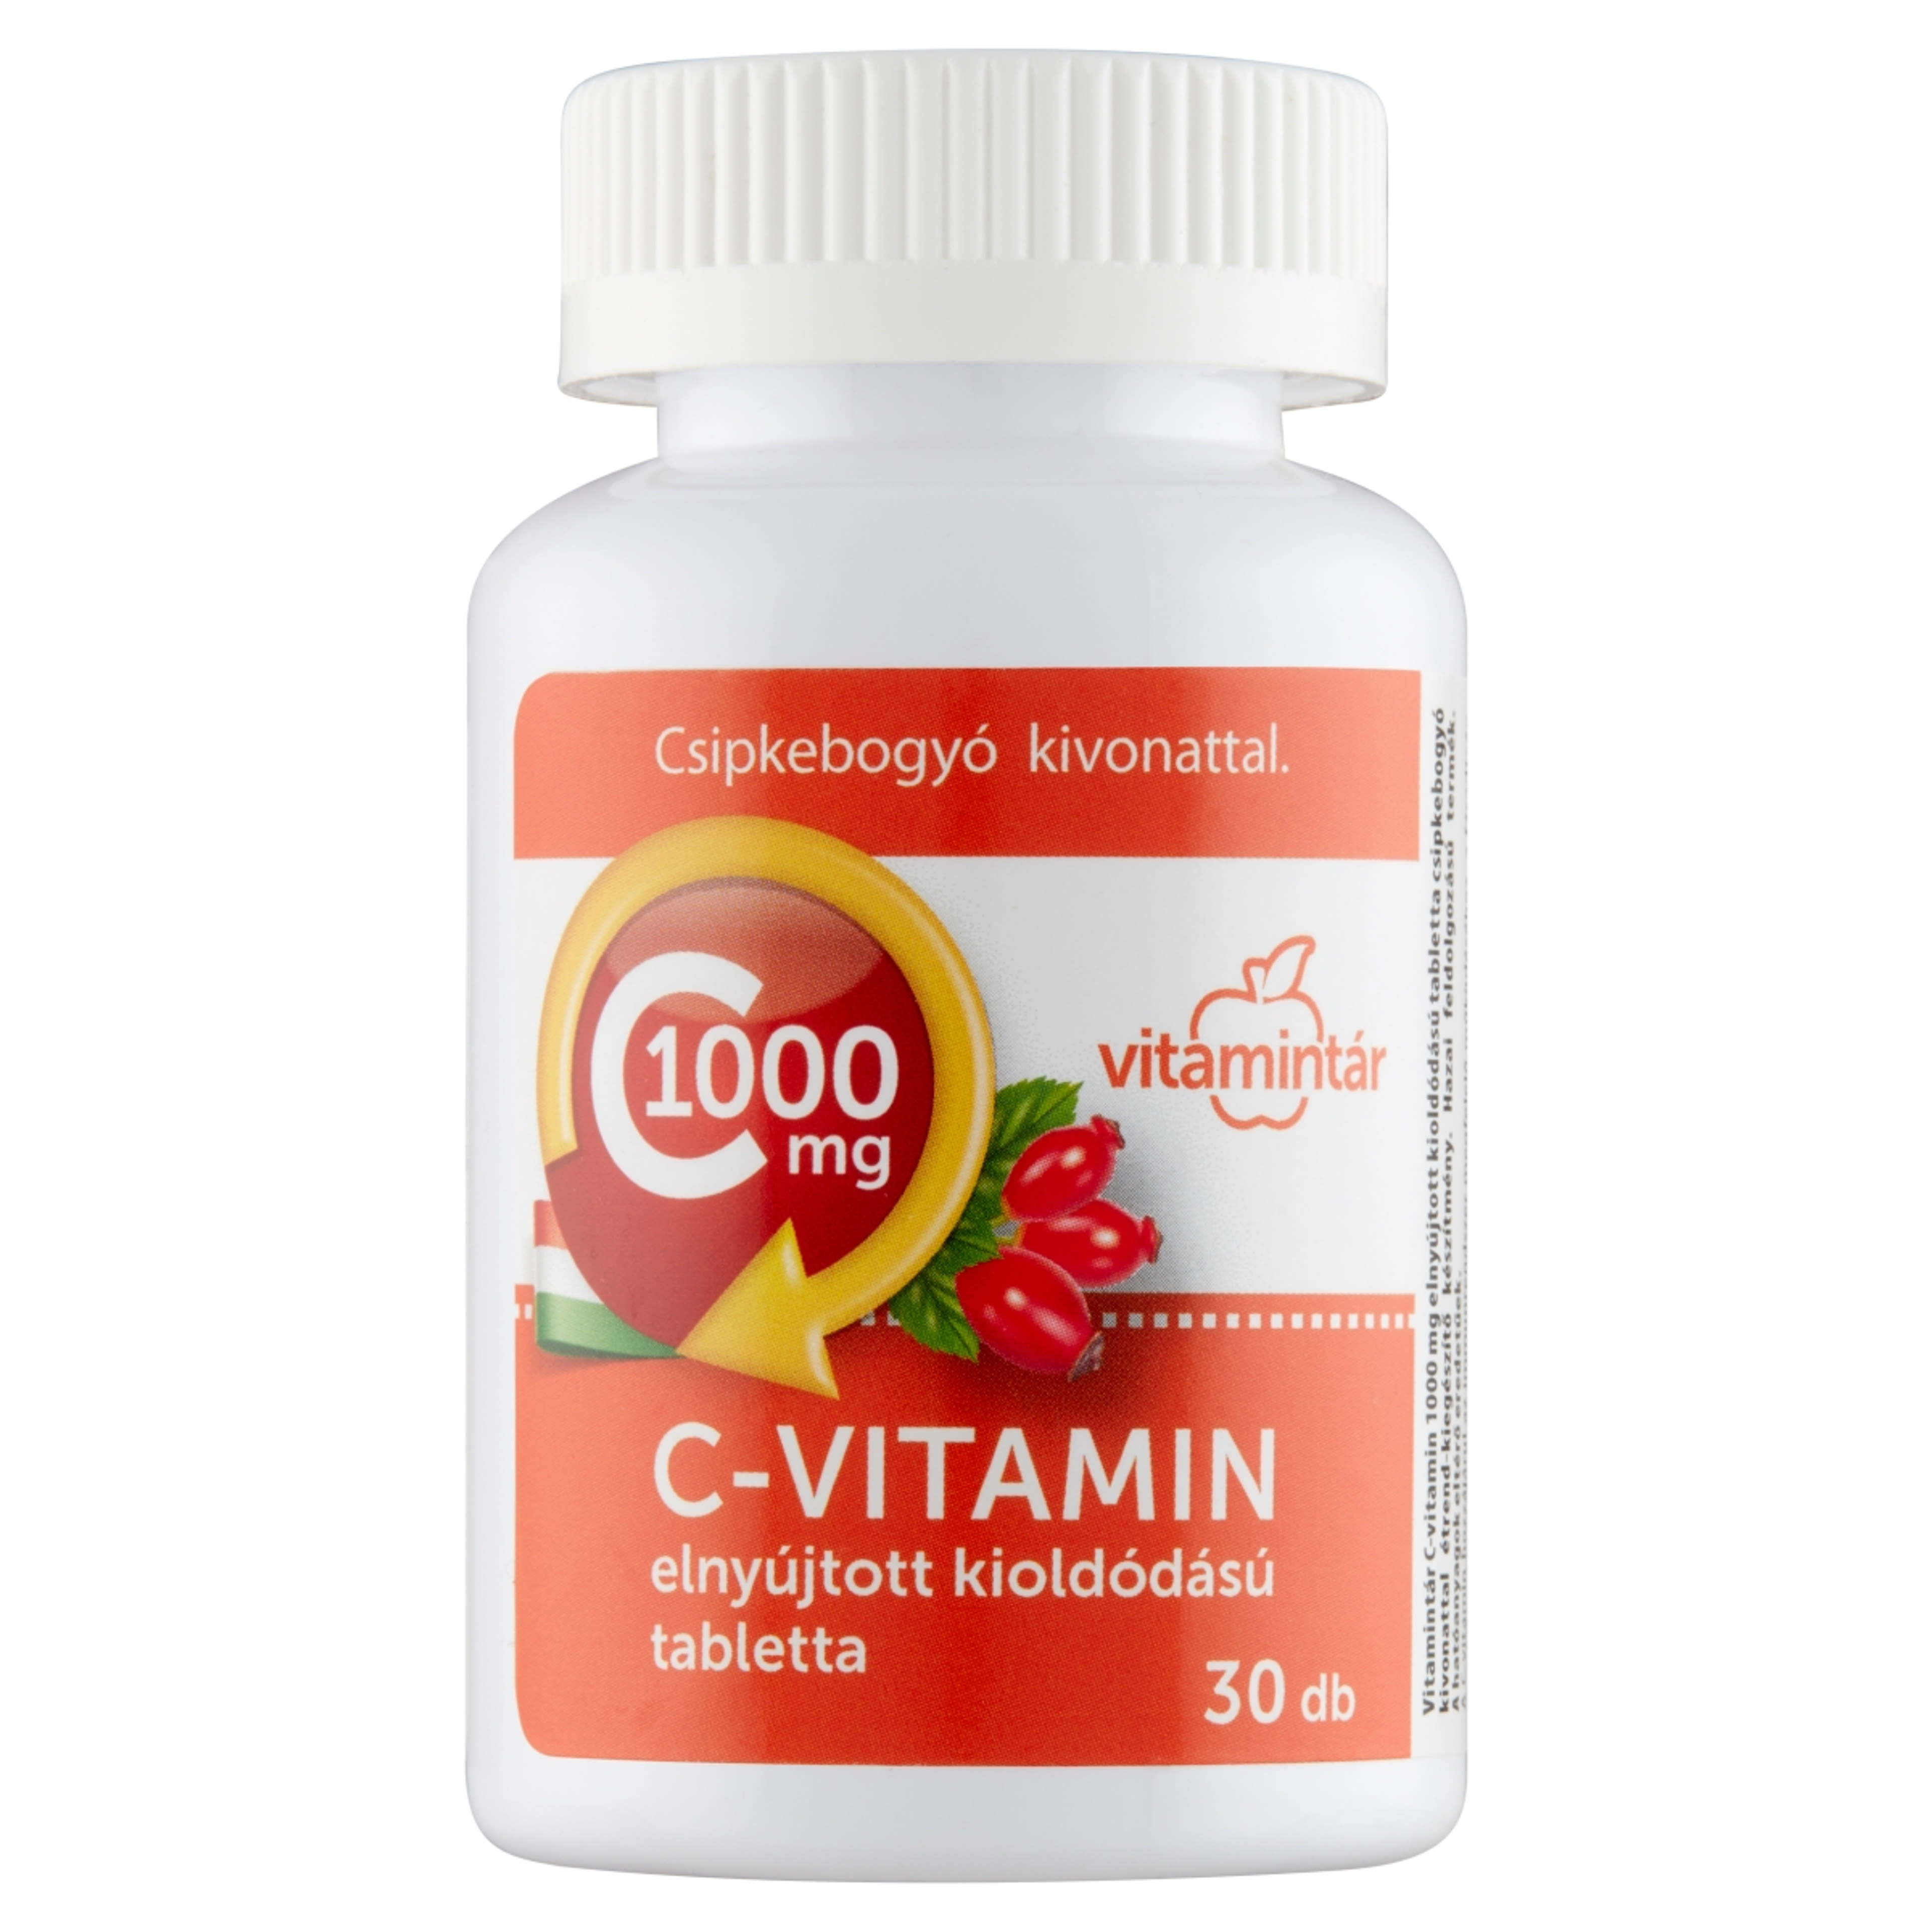 Vitamintár C-Vitamin Csipkebogyó Kivonattal 1000mg Tabletta - 30 db-1